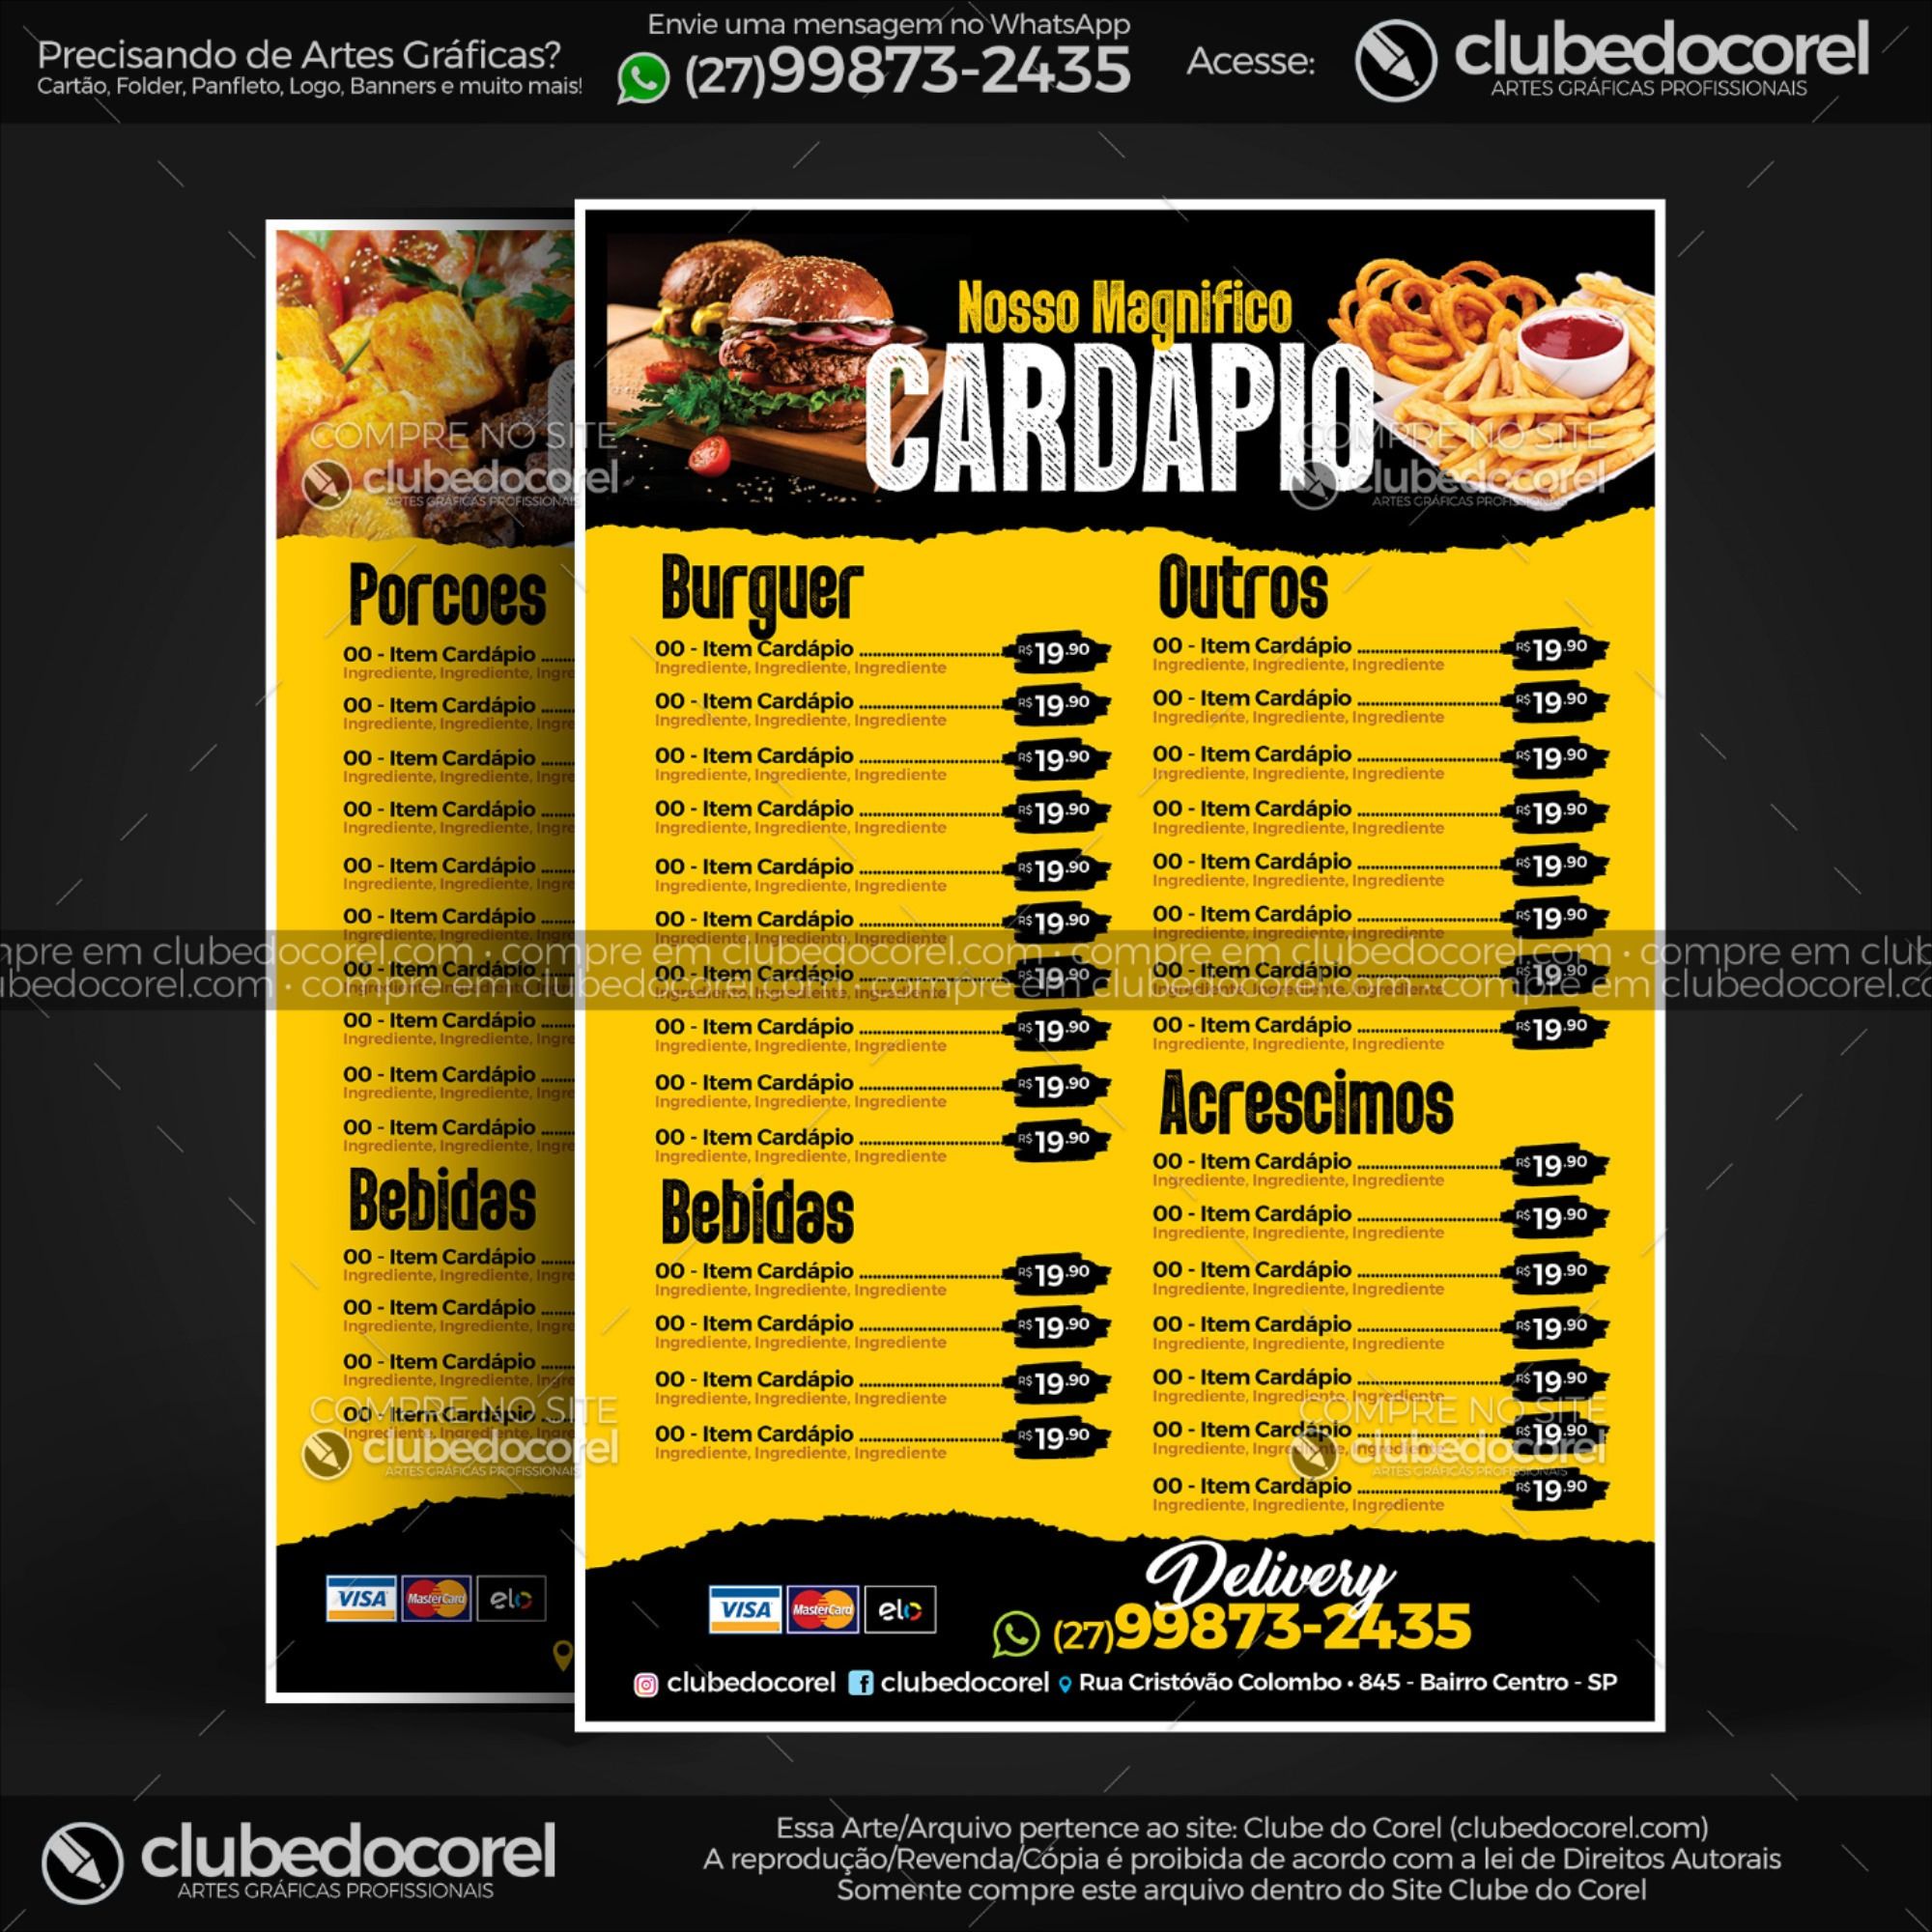 Cardápio Lanchonete #04 - Hamburguer Gourmet (CDR e PDF) | Clube do Corel |  Cardápio lanchonete, Cardapio de lanches, Hambúrguer gourmet - cardapio hamburgueria